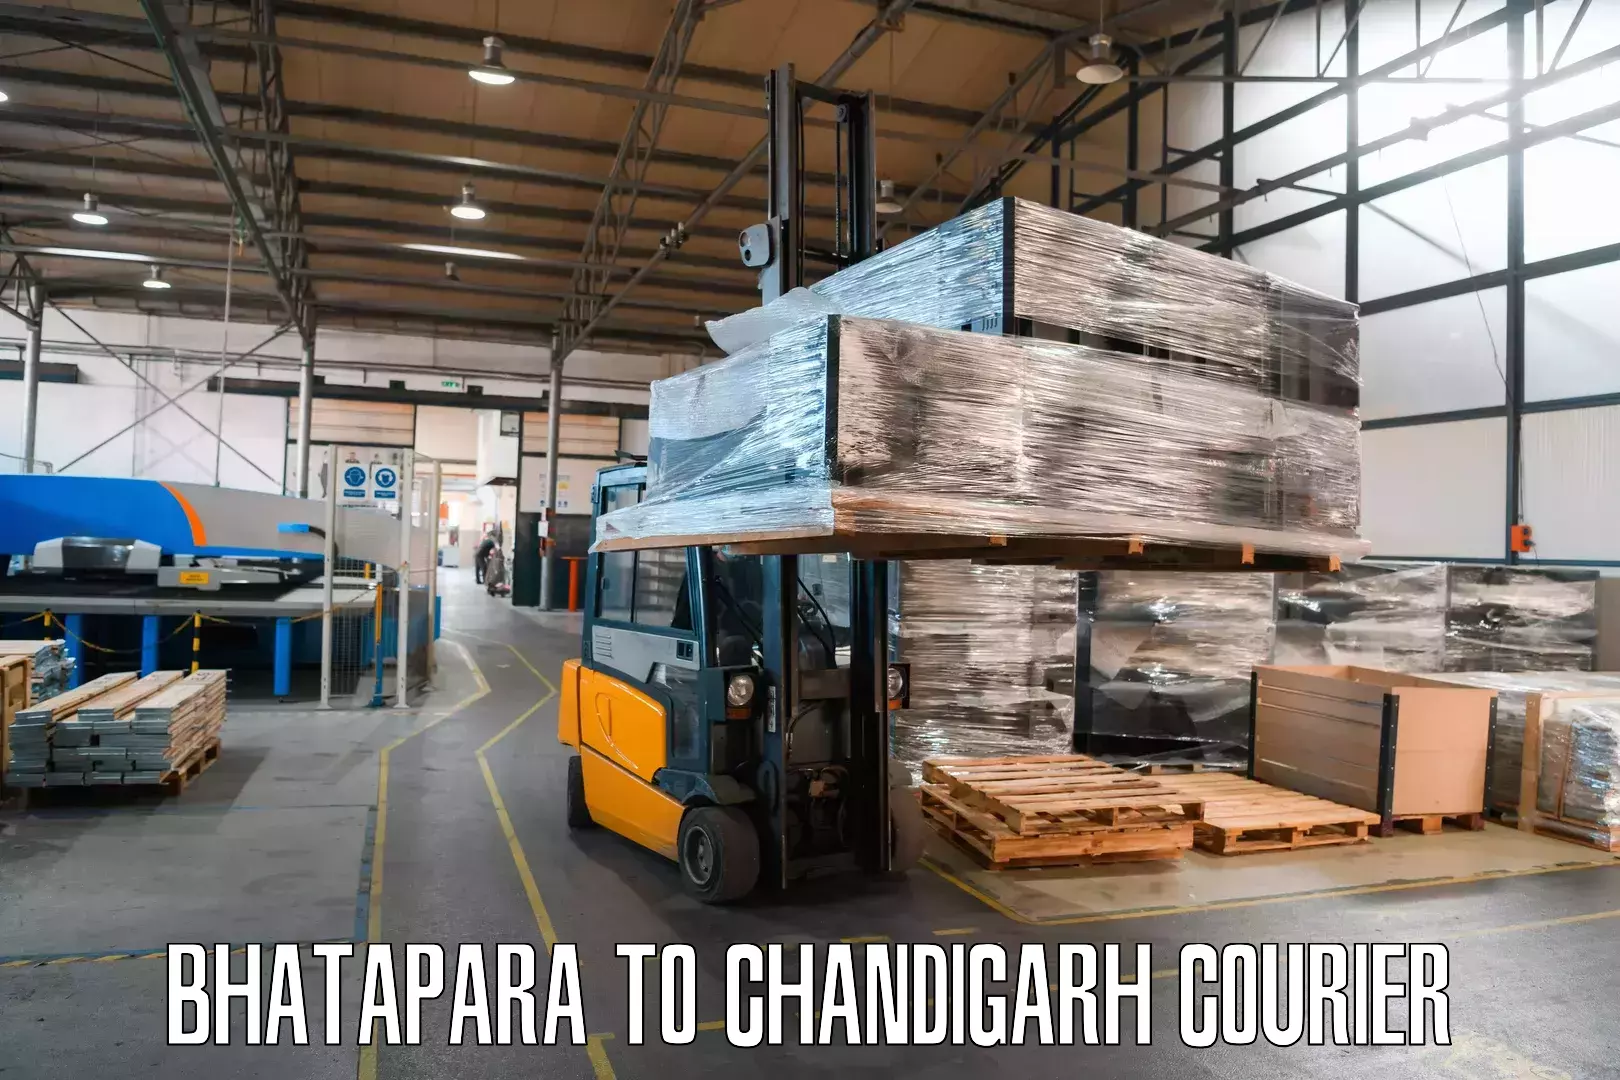 Express mail solutions Bhatapara to Chandigarh